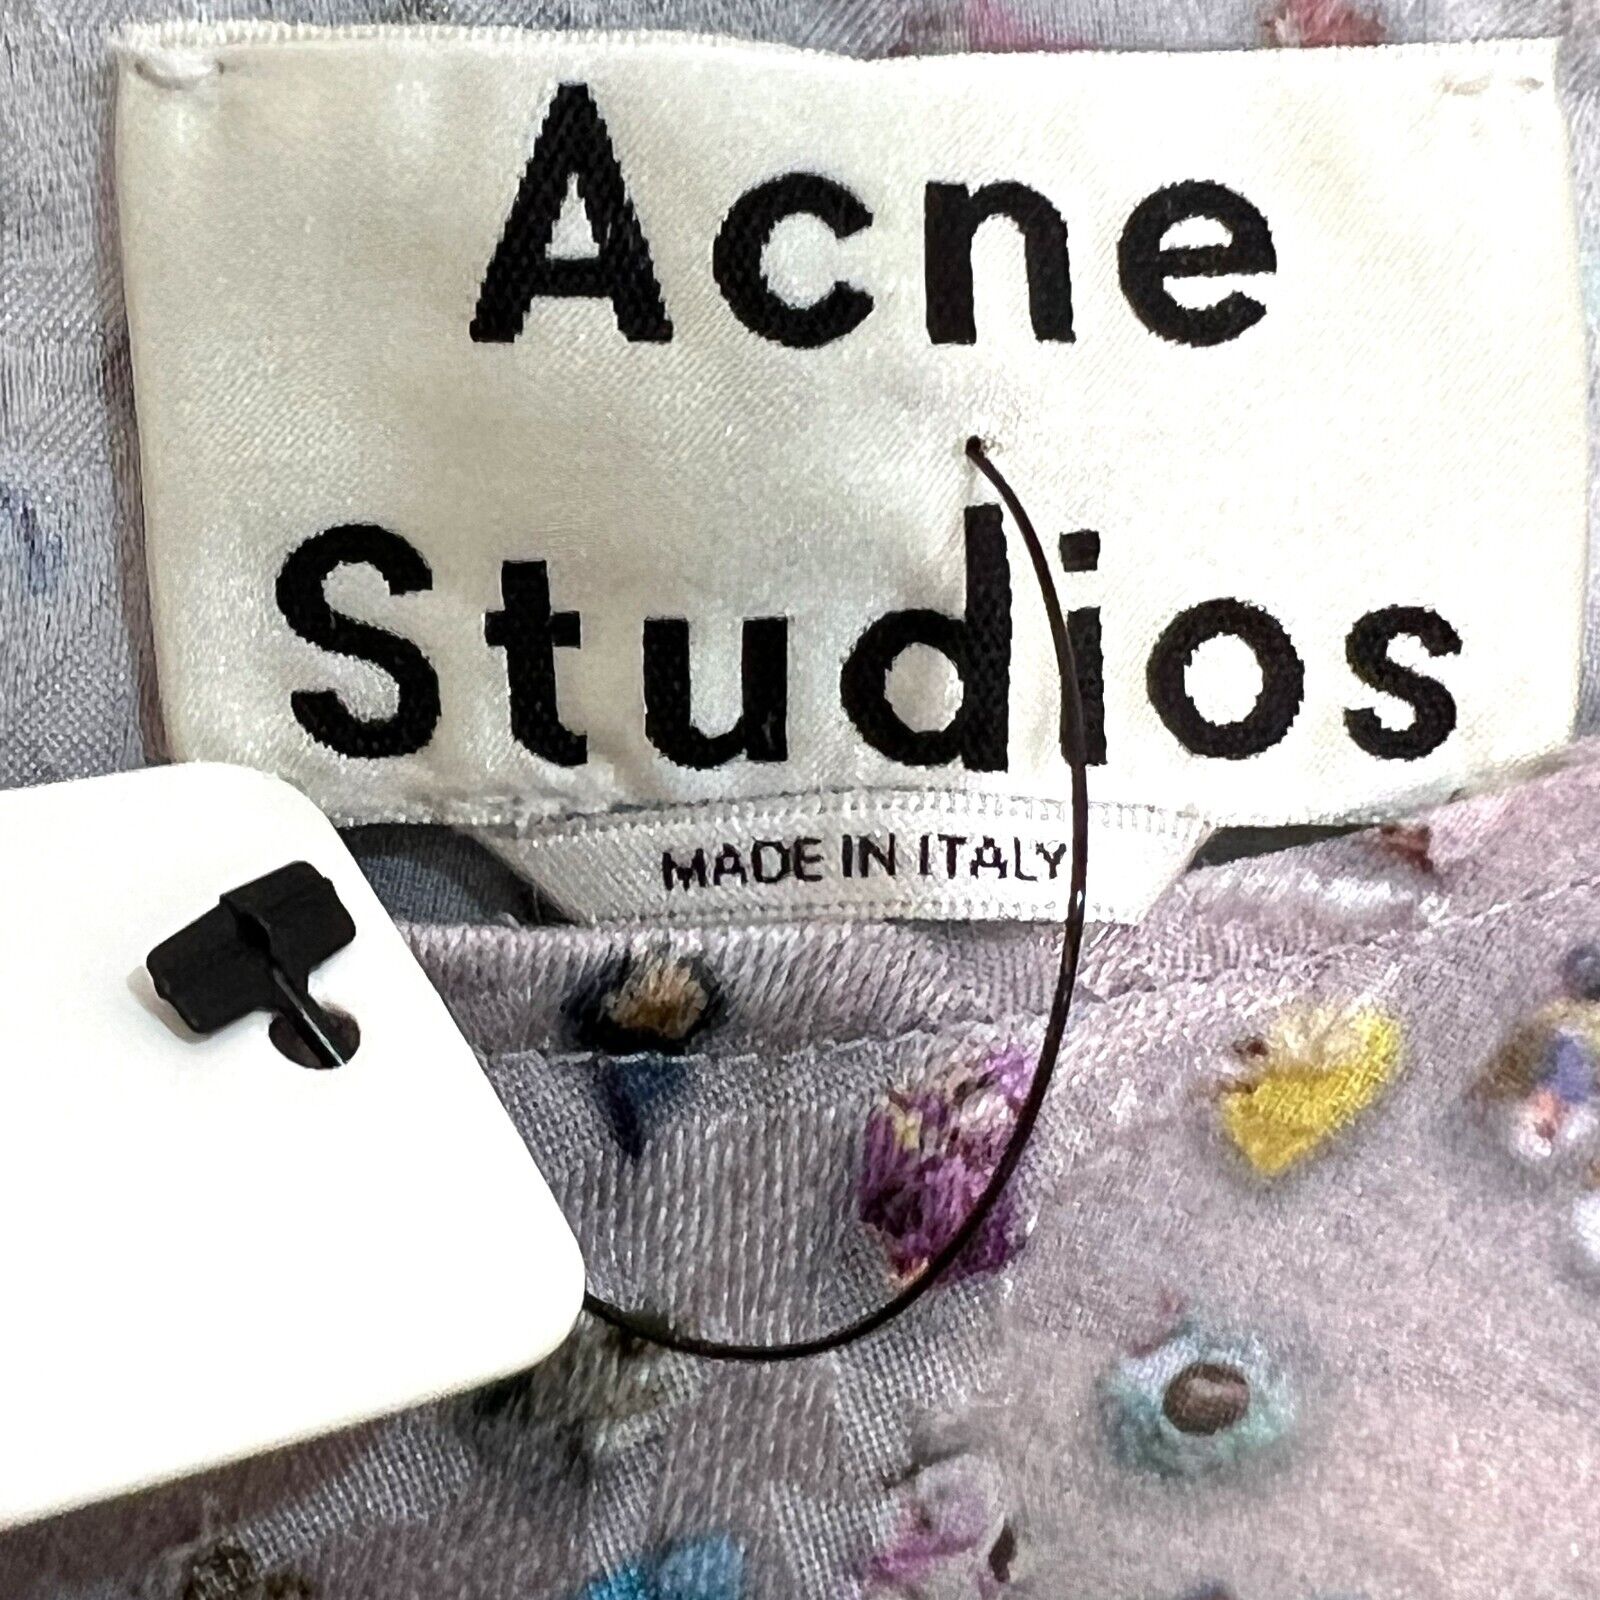 NEW Acne Studios Darlotte Crowd Print Frill Dress EU 40 / US 8 - Amazing Fabric